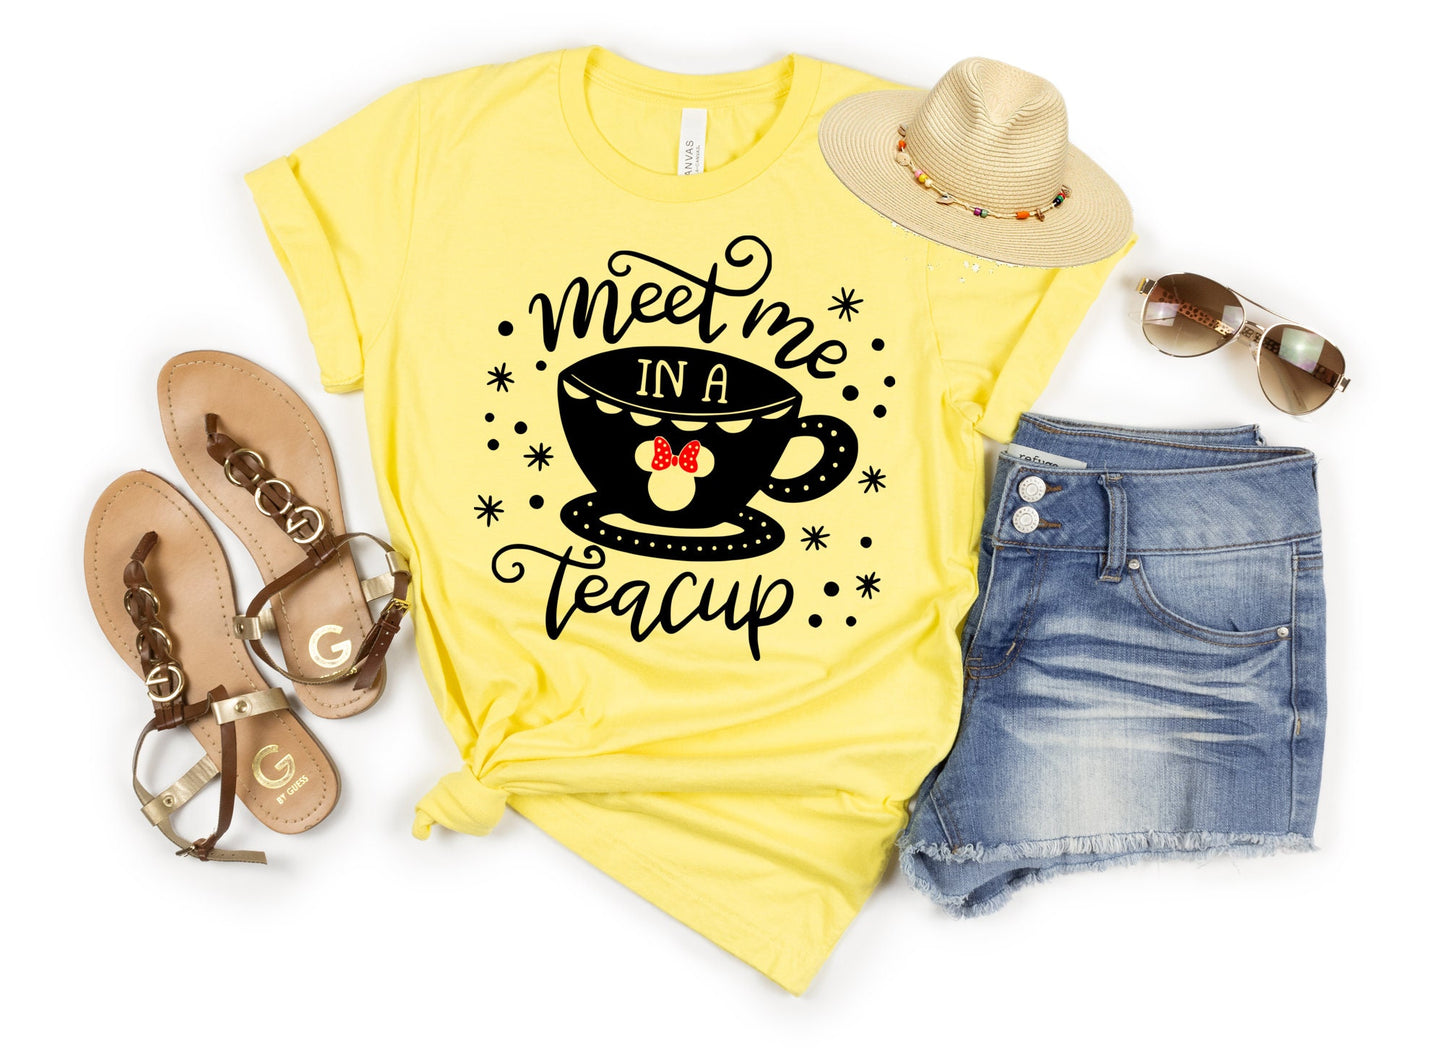 Meet Me In A Teacup Shirt, Alice in Wonderland Shirt, Mad Tea Party Ride Shirt, Disney Trip Shirt, Vacation Trip Shirt, Women's Shirt